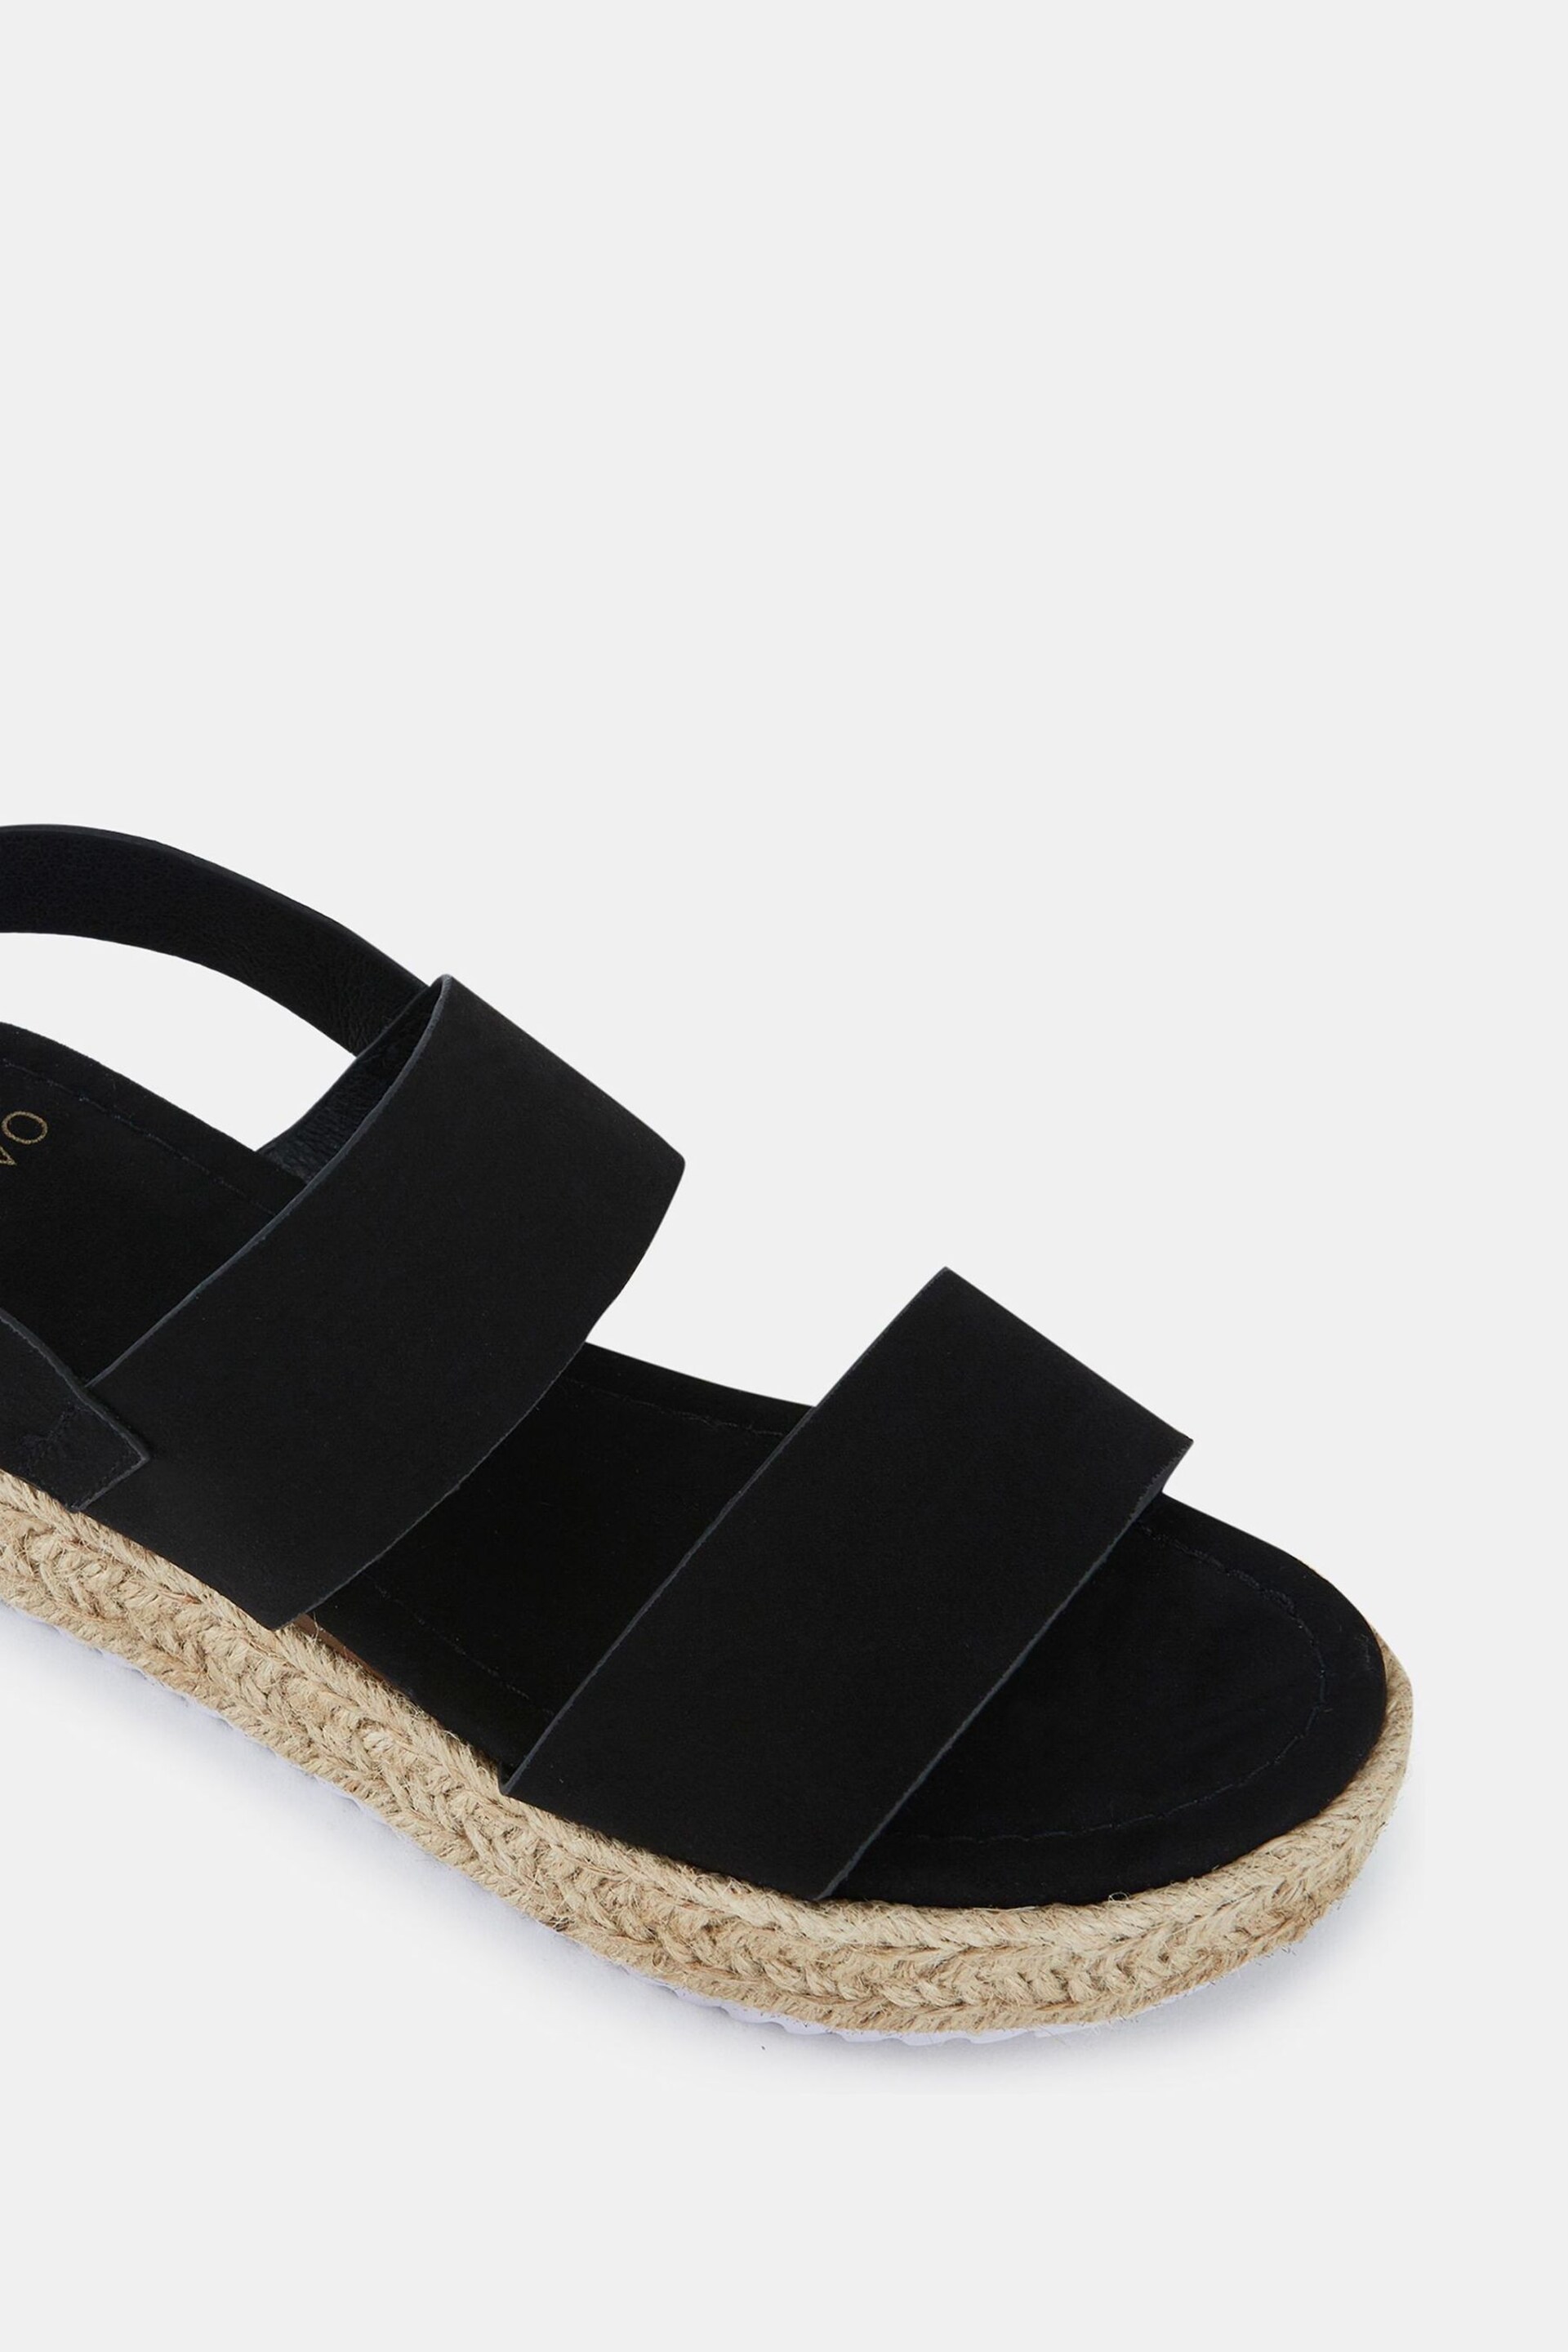 Novo Black Wide Fit Sadie Espadrille Double Strap Sandals - Image 4 of 5